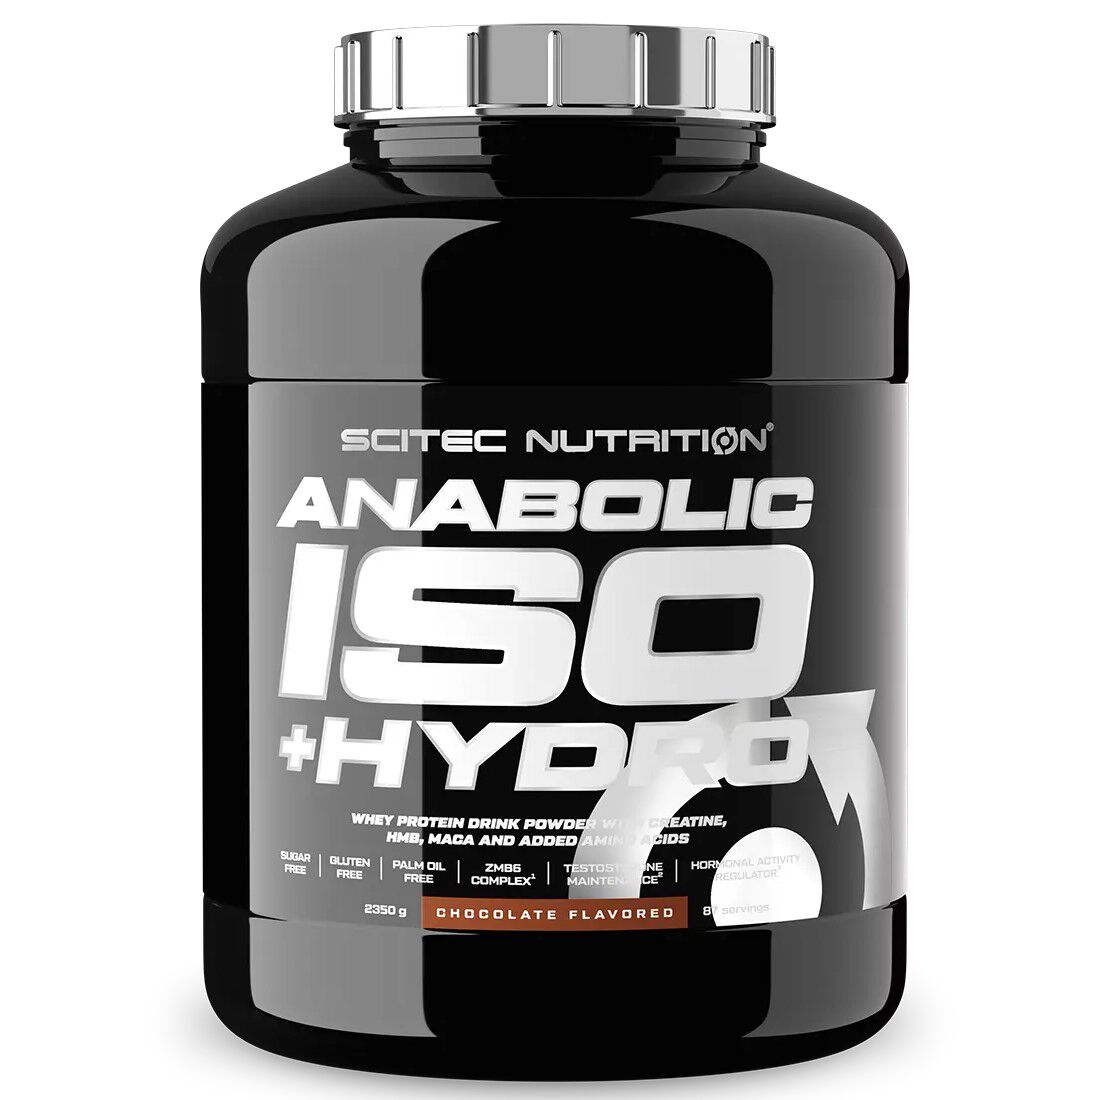 Anabolic Iso+ Hydro